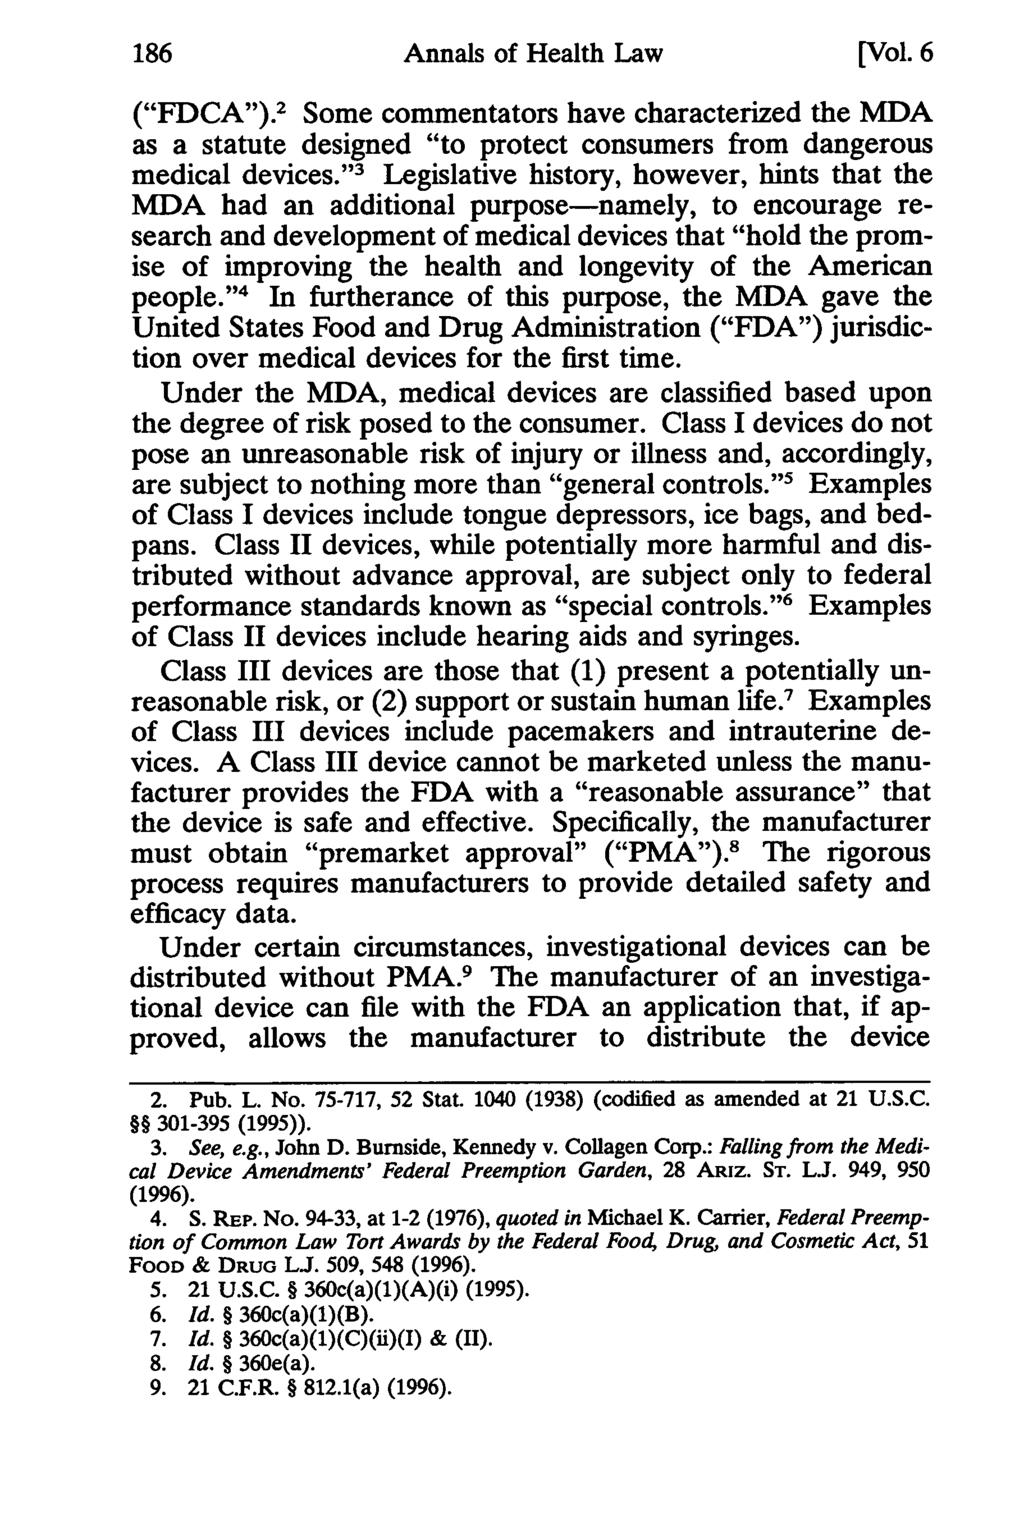 186 Annals of Health Annals Law, Vol. of 6 Health [1997], Iss. Law 1, Art. 10 [Vol. 6 ("FDCA").